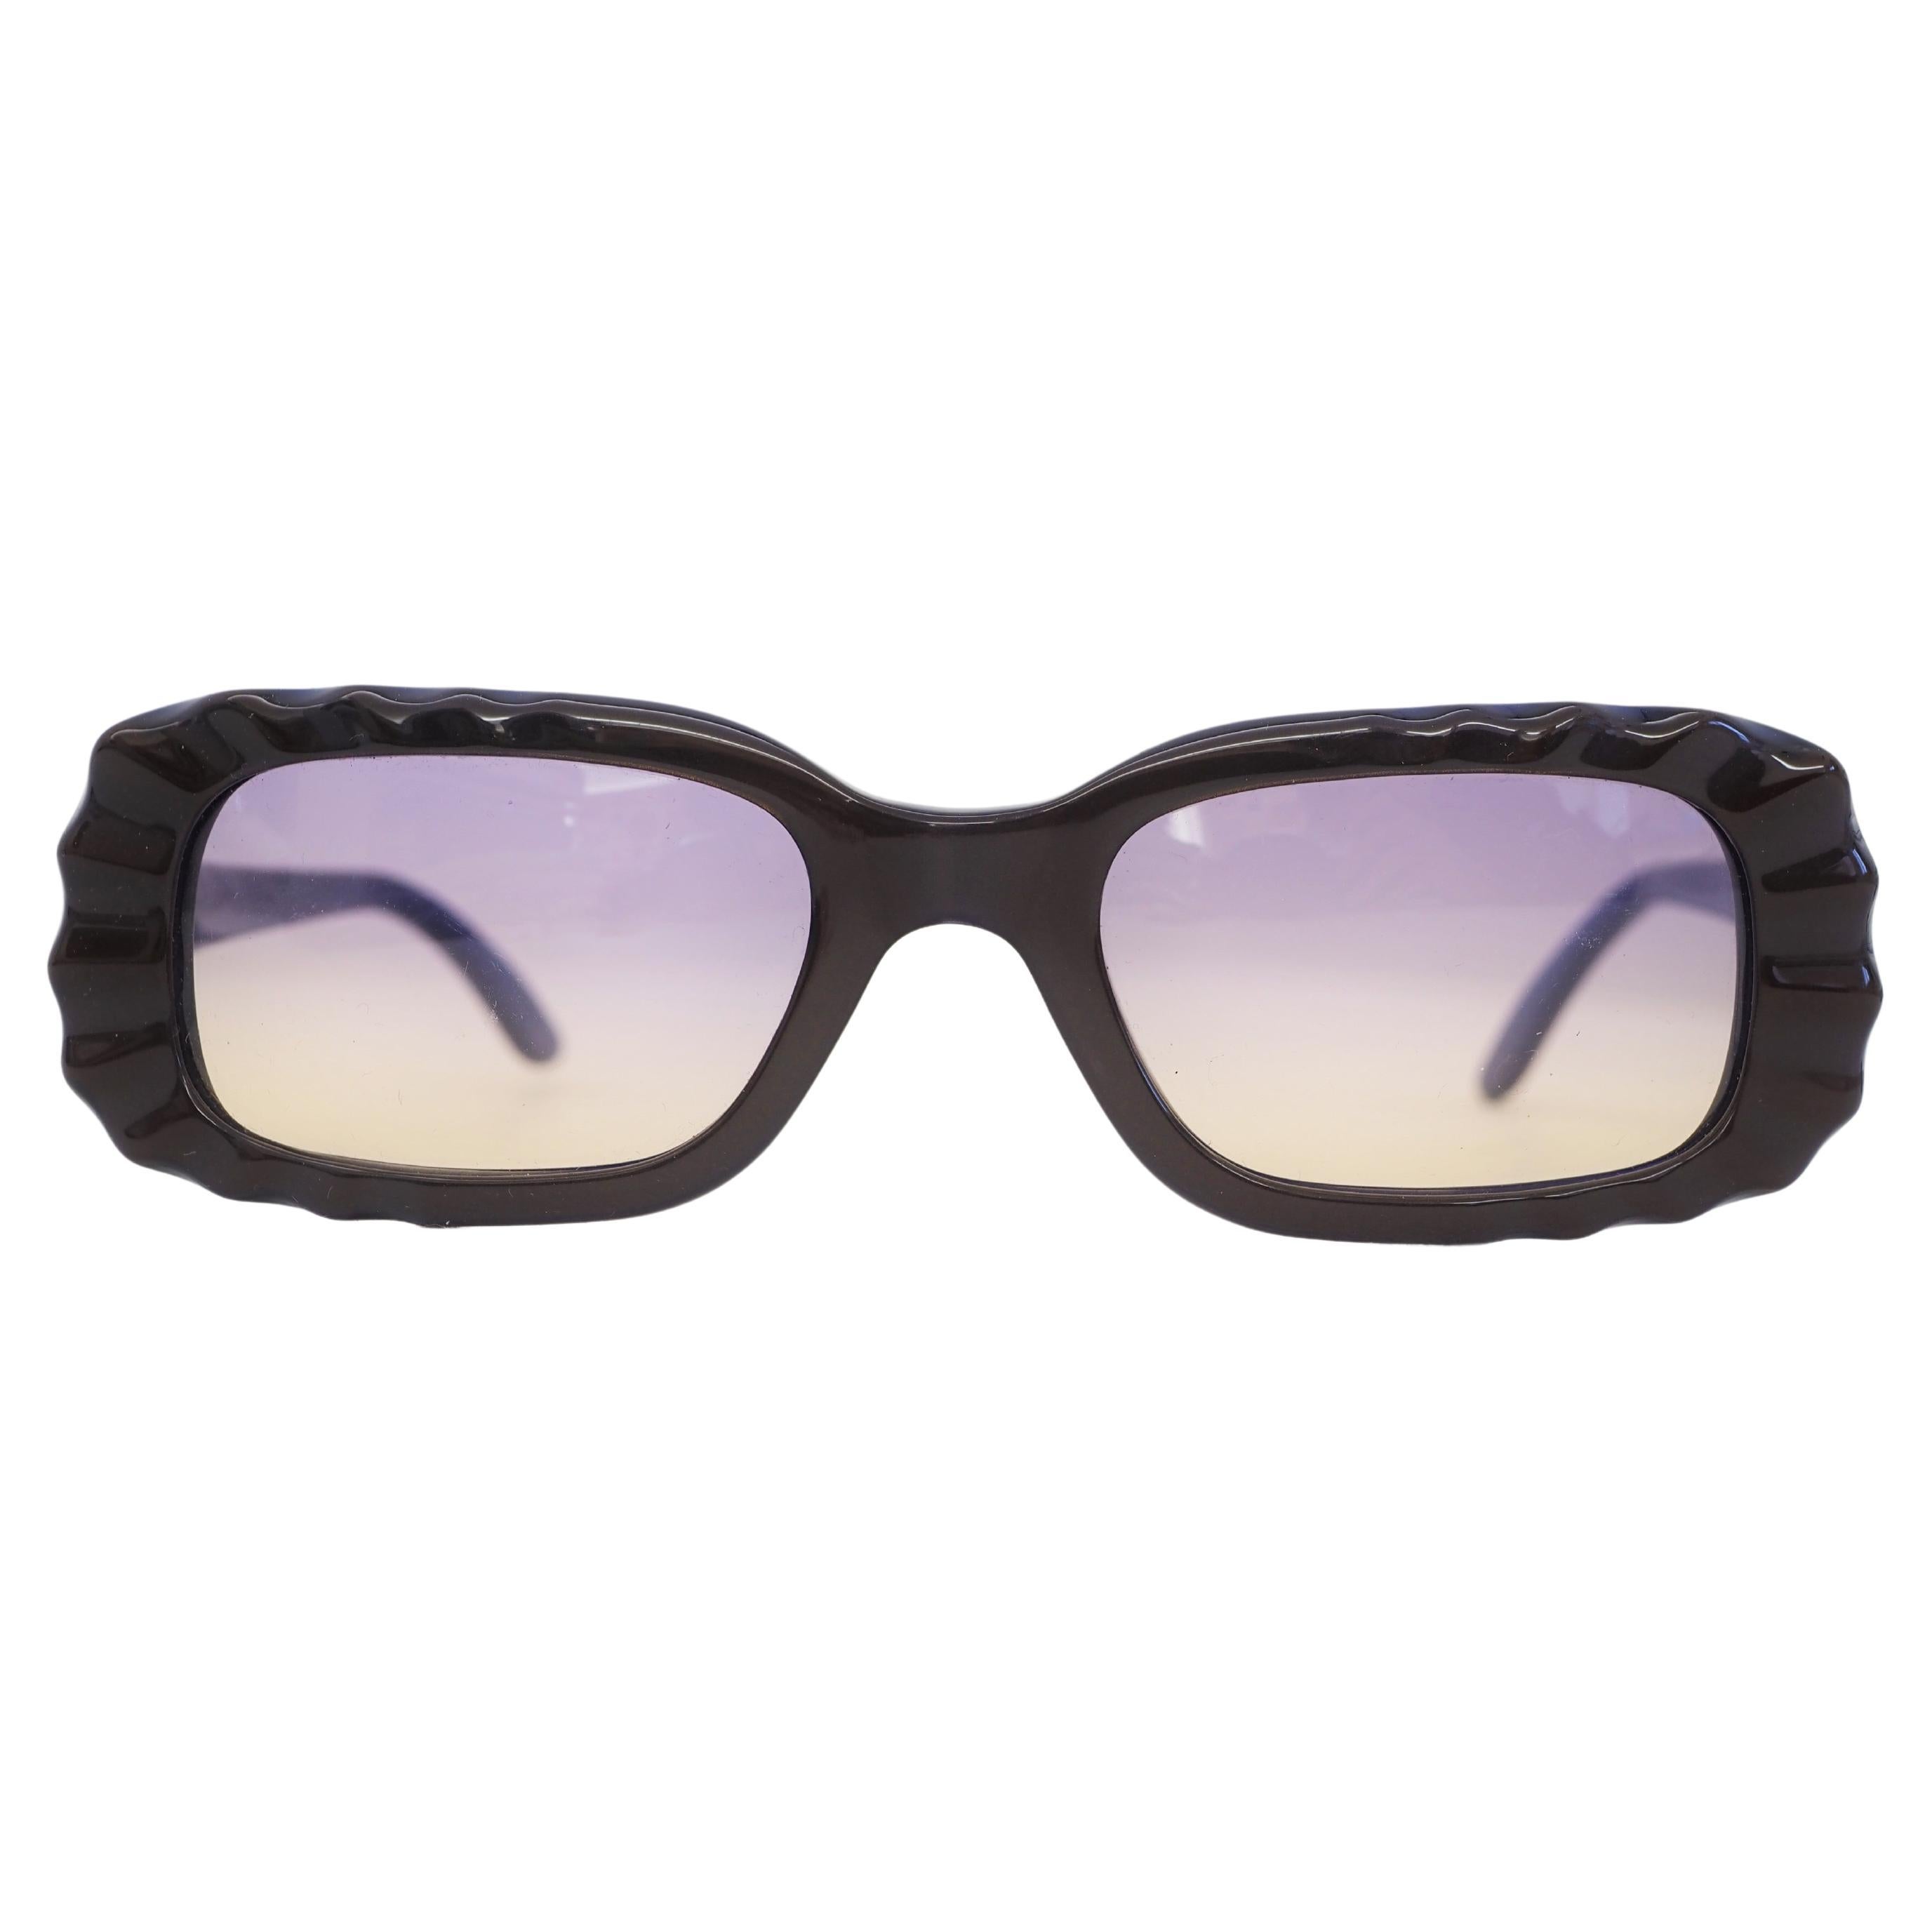 Anna Sui Sunglasses - For Sale on 1stDibs